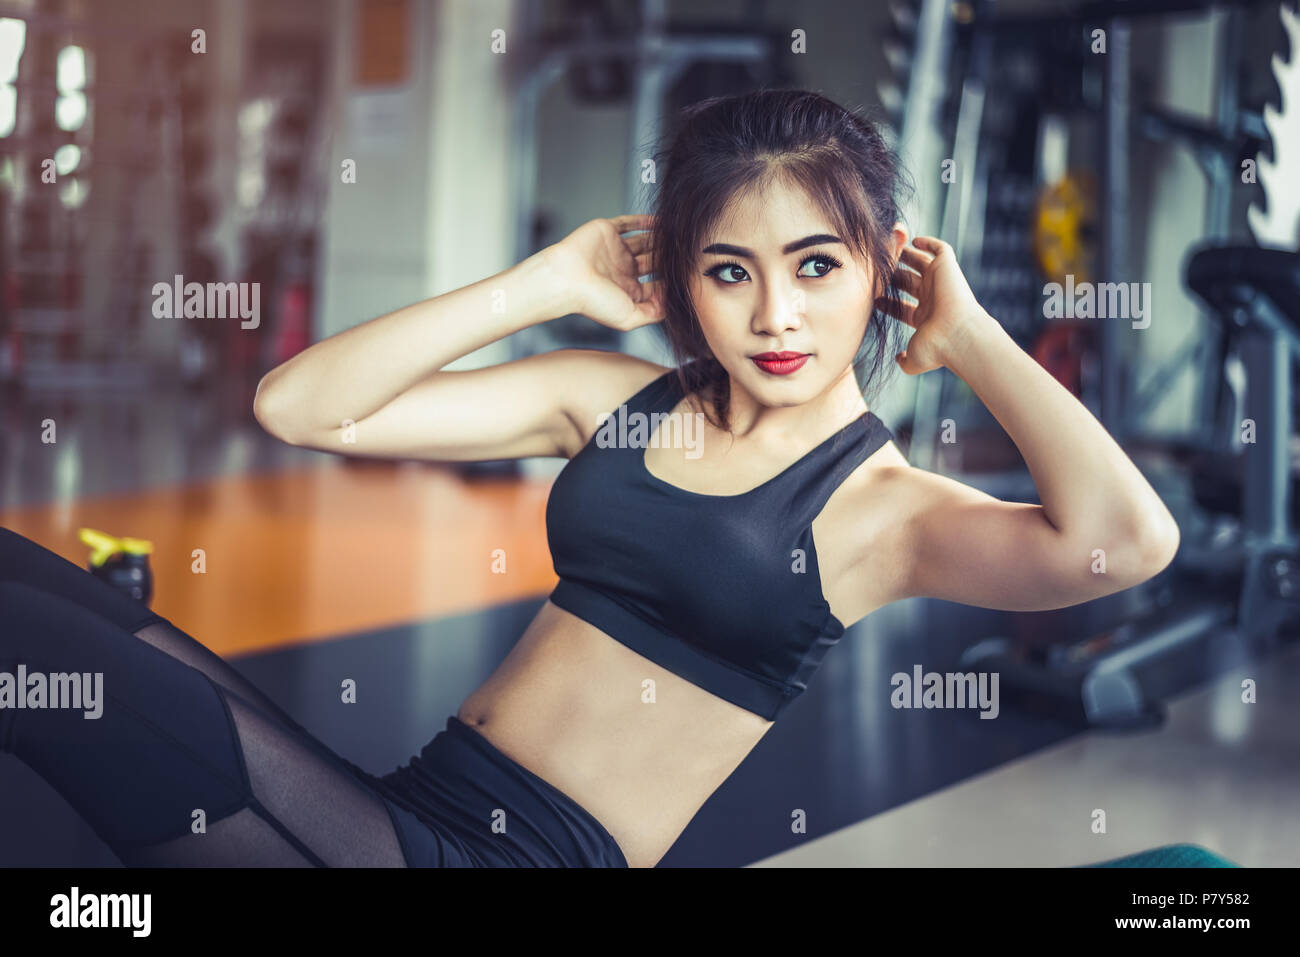 Gym girl Stock Photo by ©ooGleb 54759551